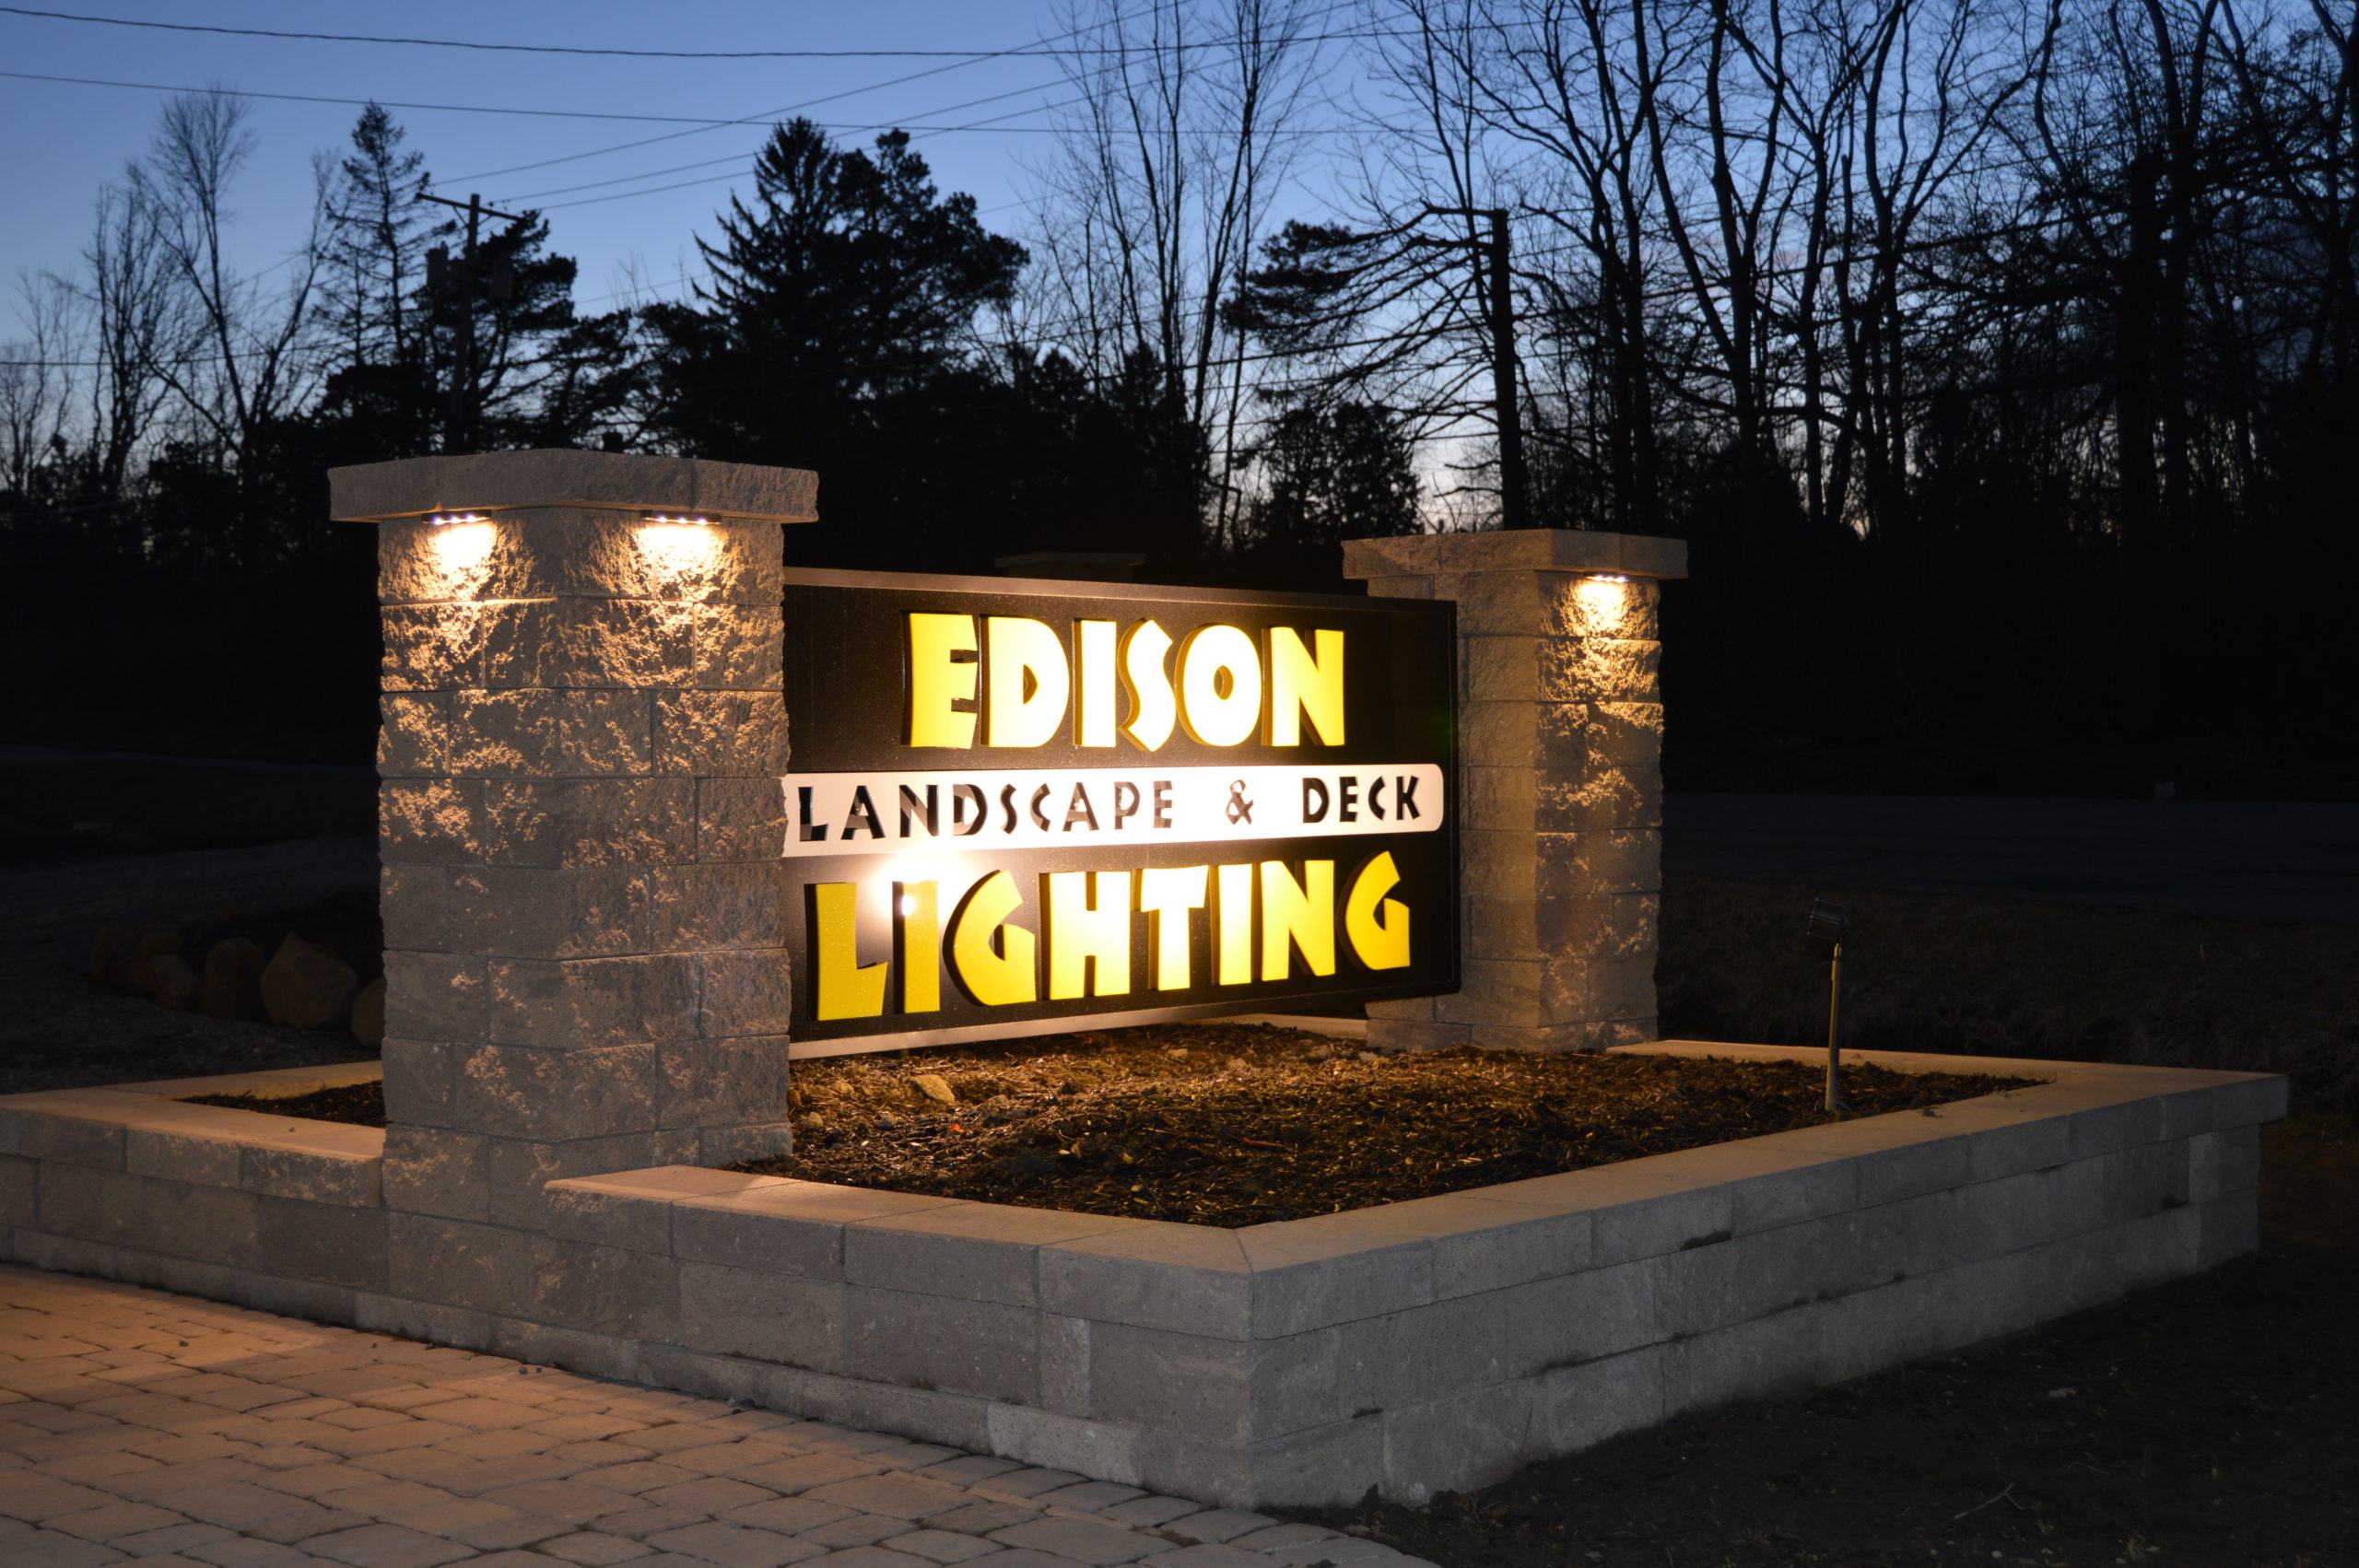 Edison Landsacpe & Deck Illuminated Sign